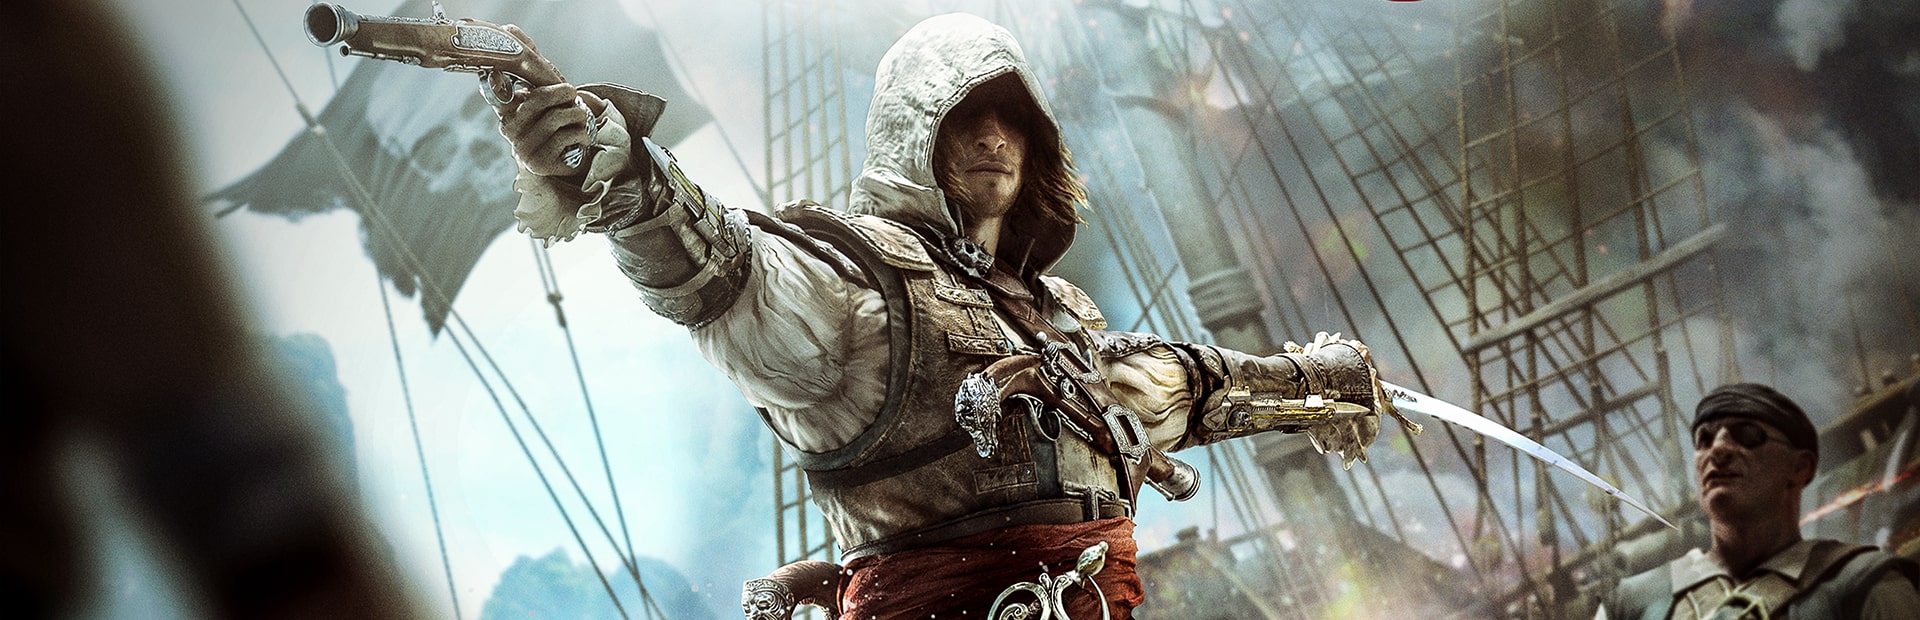 Assassin's Creed IV Black Flag | PC | Uplay Digital Download | Wallpaper